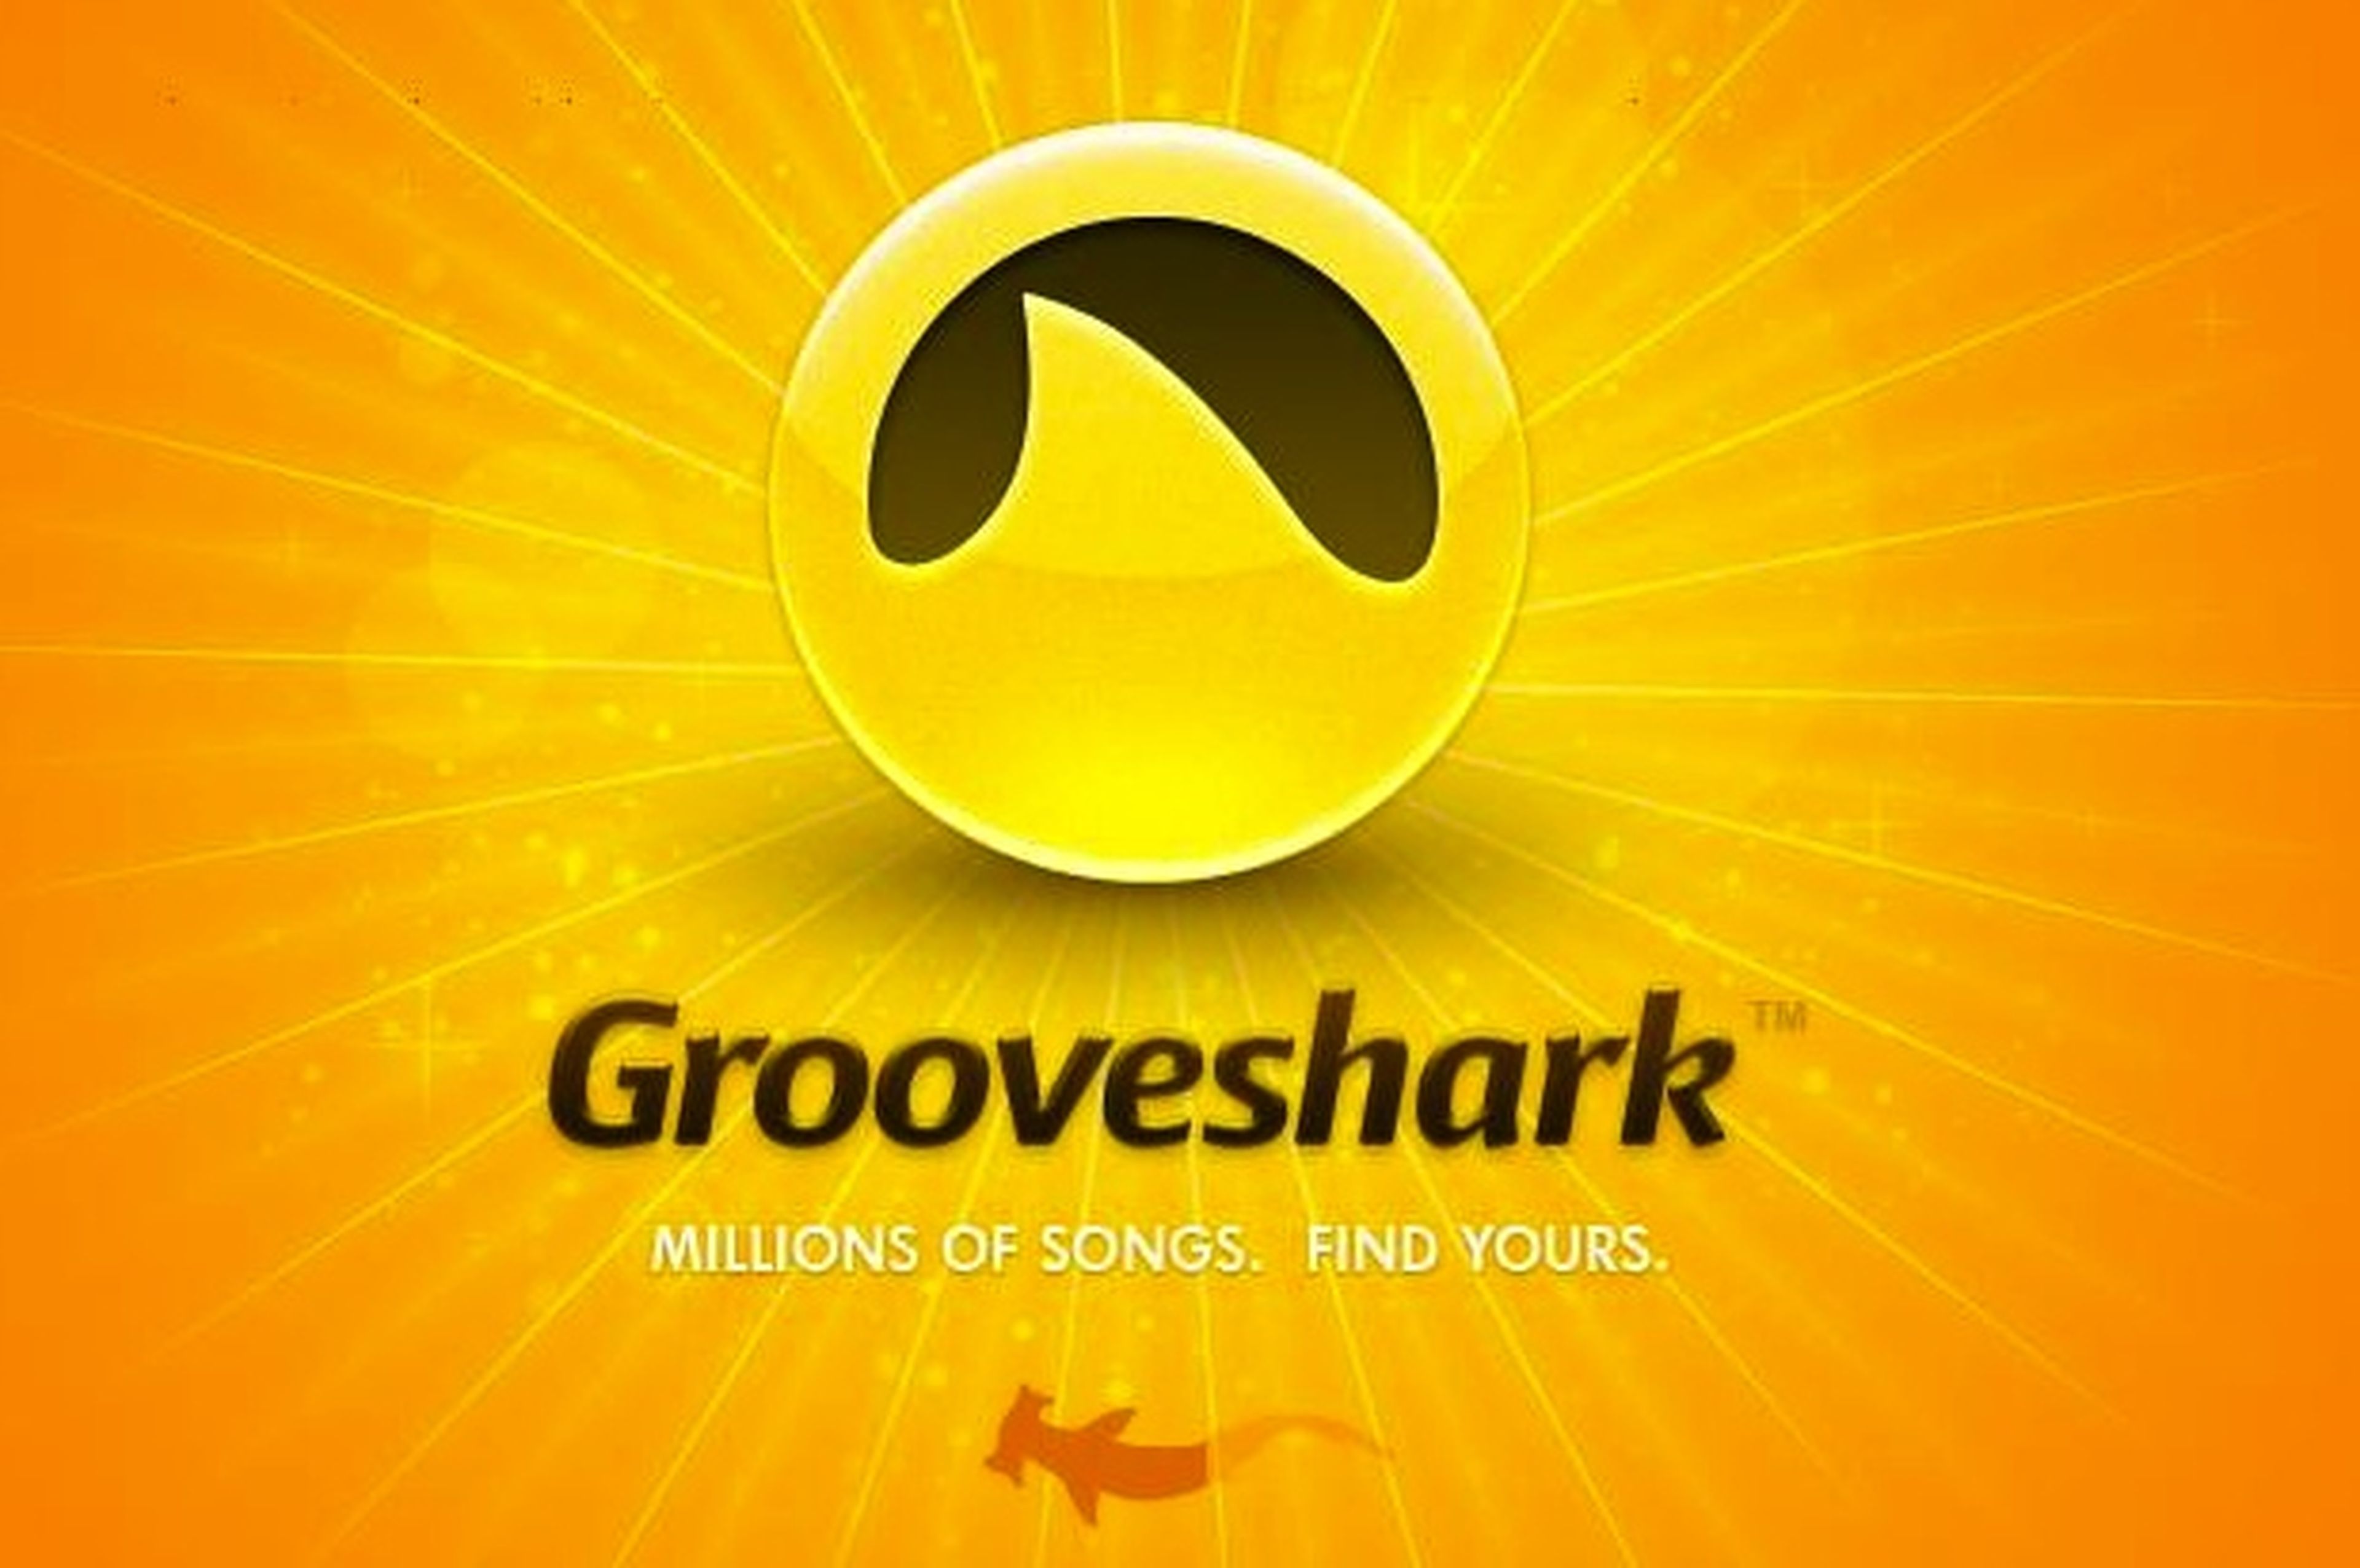 Comparte tus gustos musicales a travÃ©s de Grooveshark